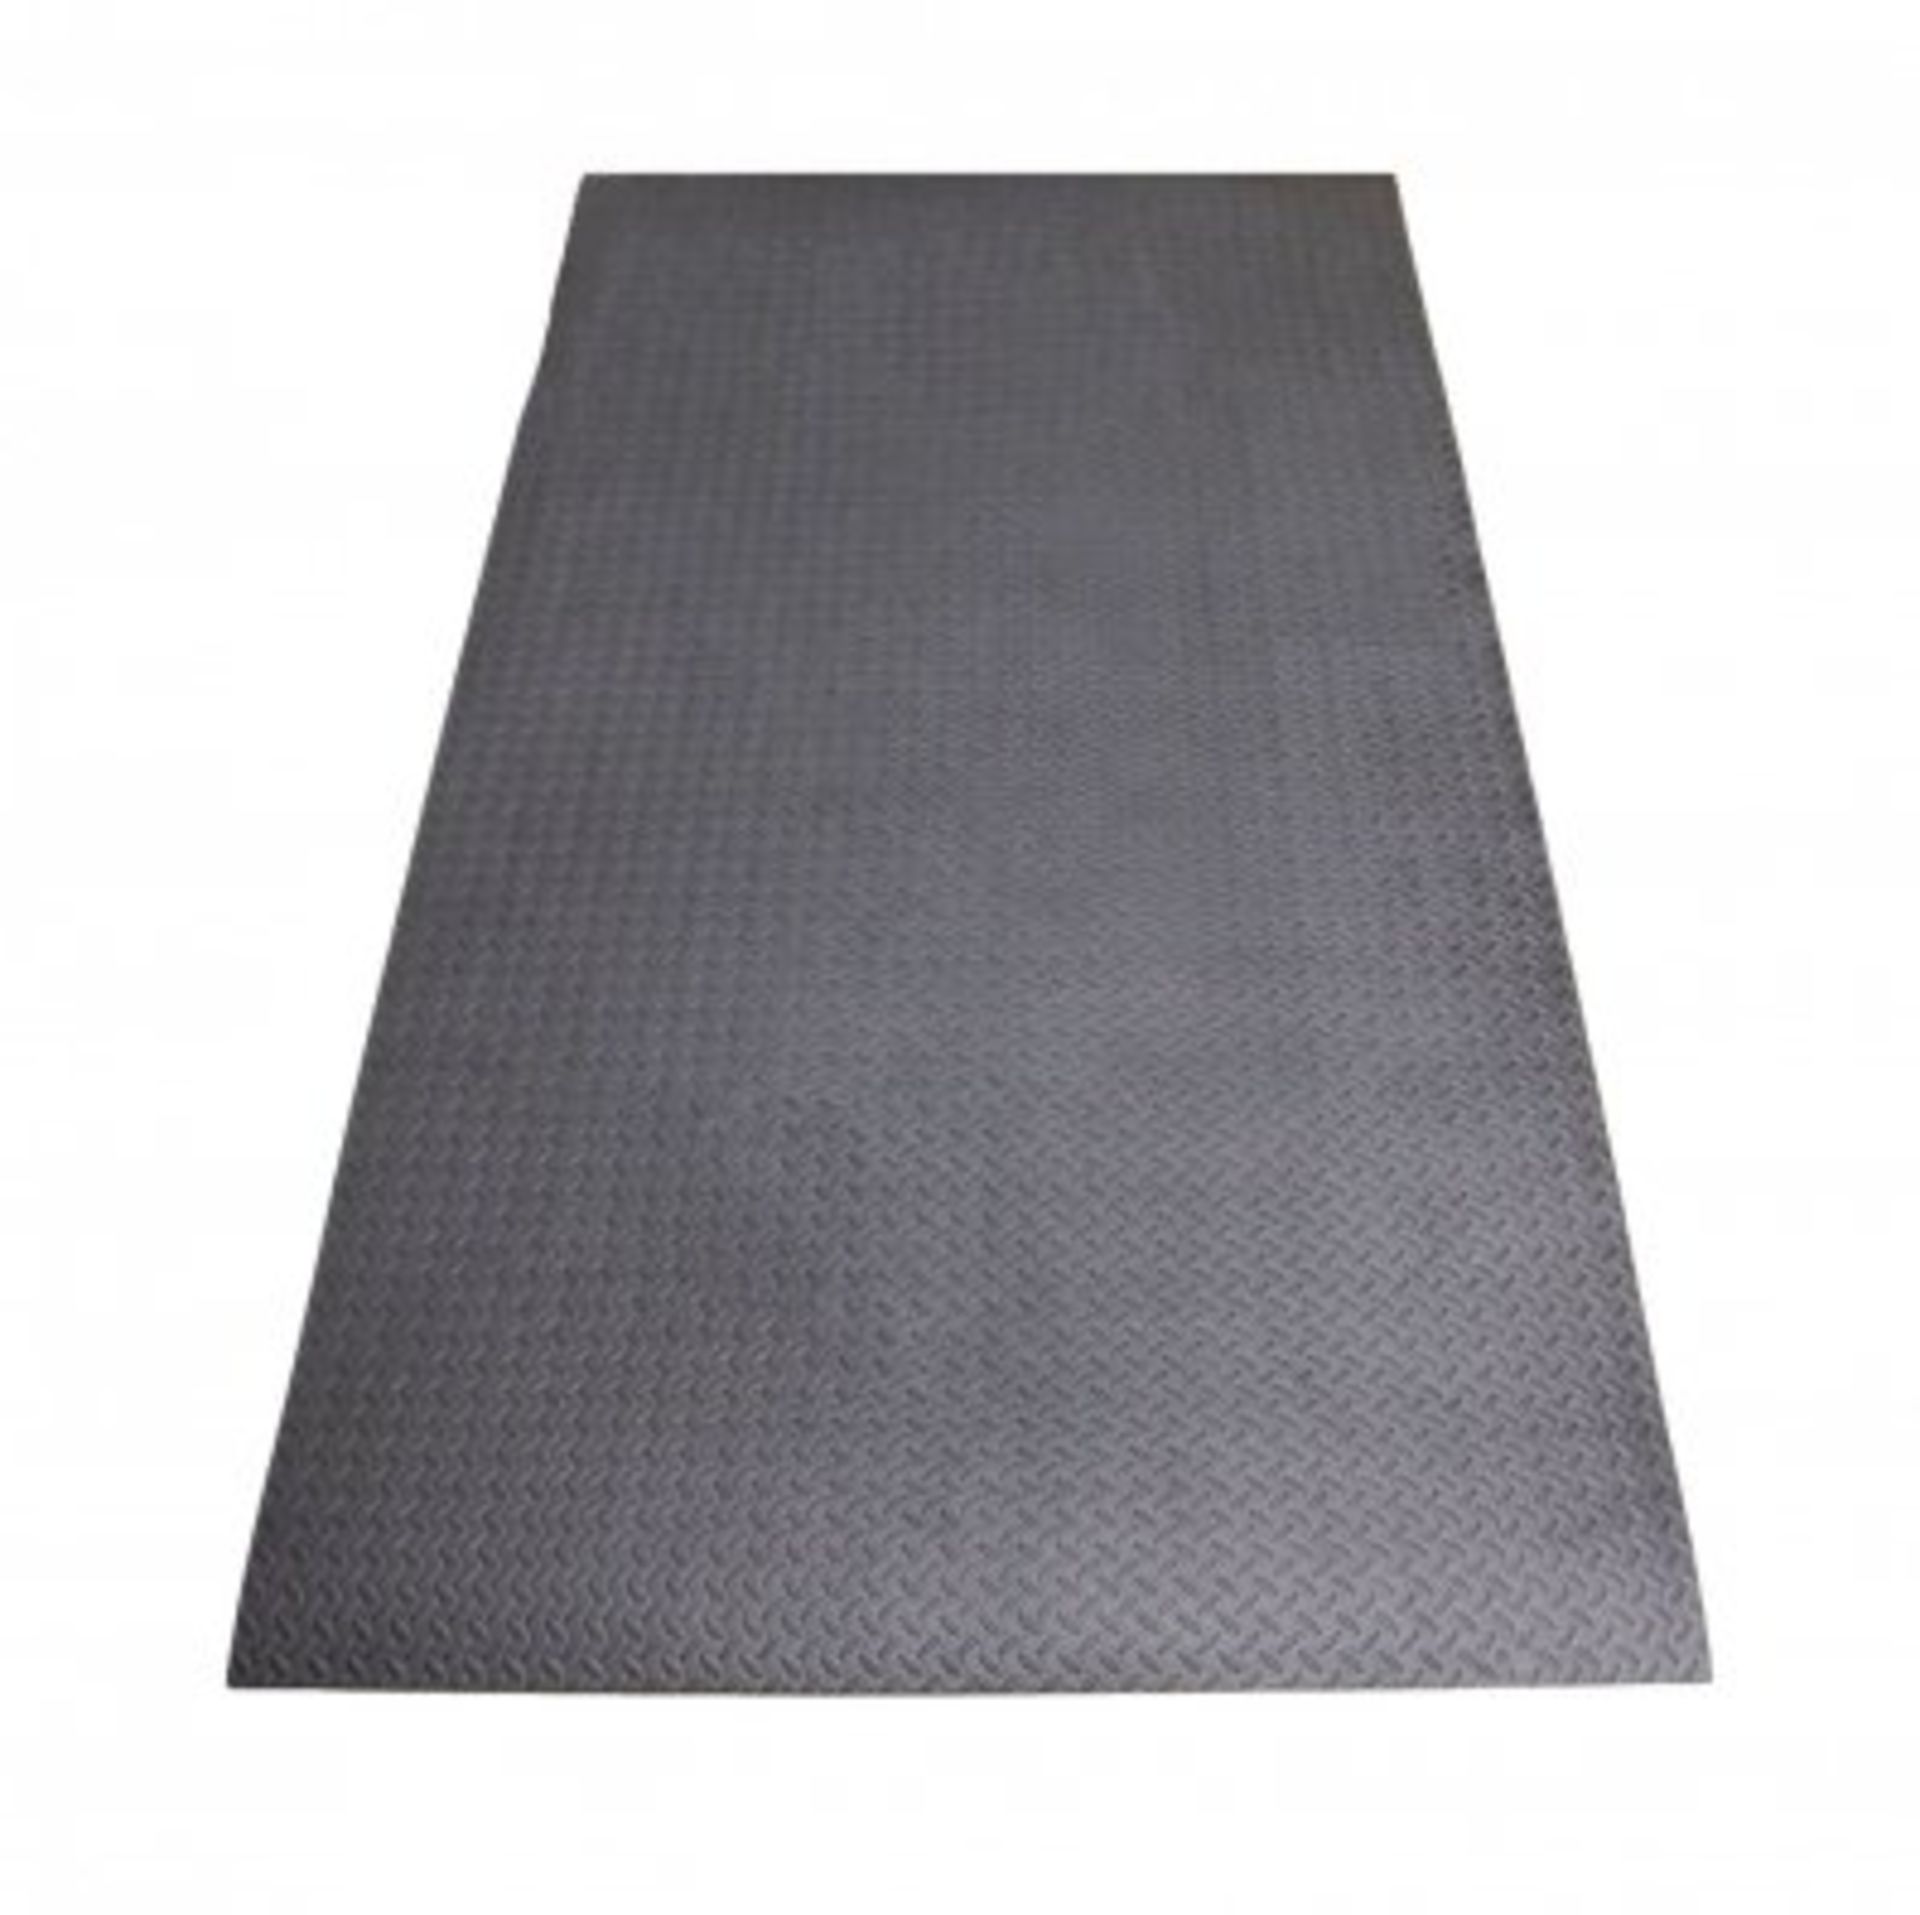 (LF261) Large Multi-Purpose Safety EVA Floor Mat Play Garage Gym Matting The rubber floor ...